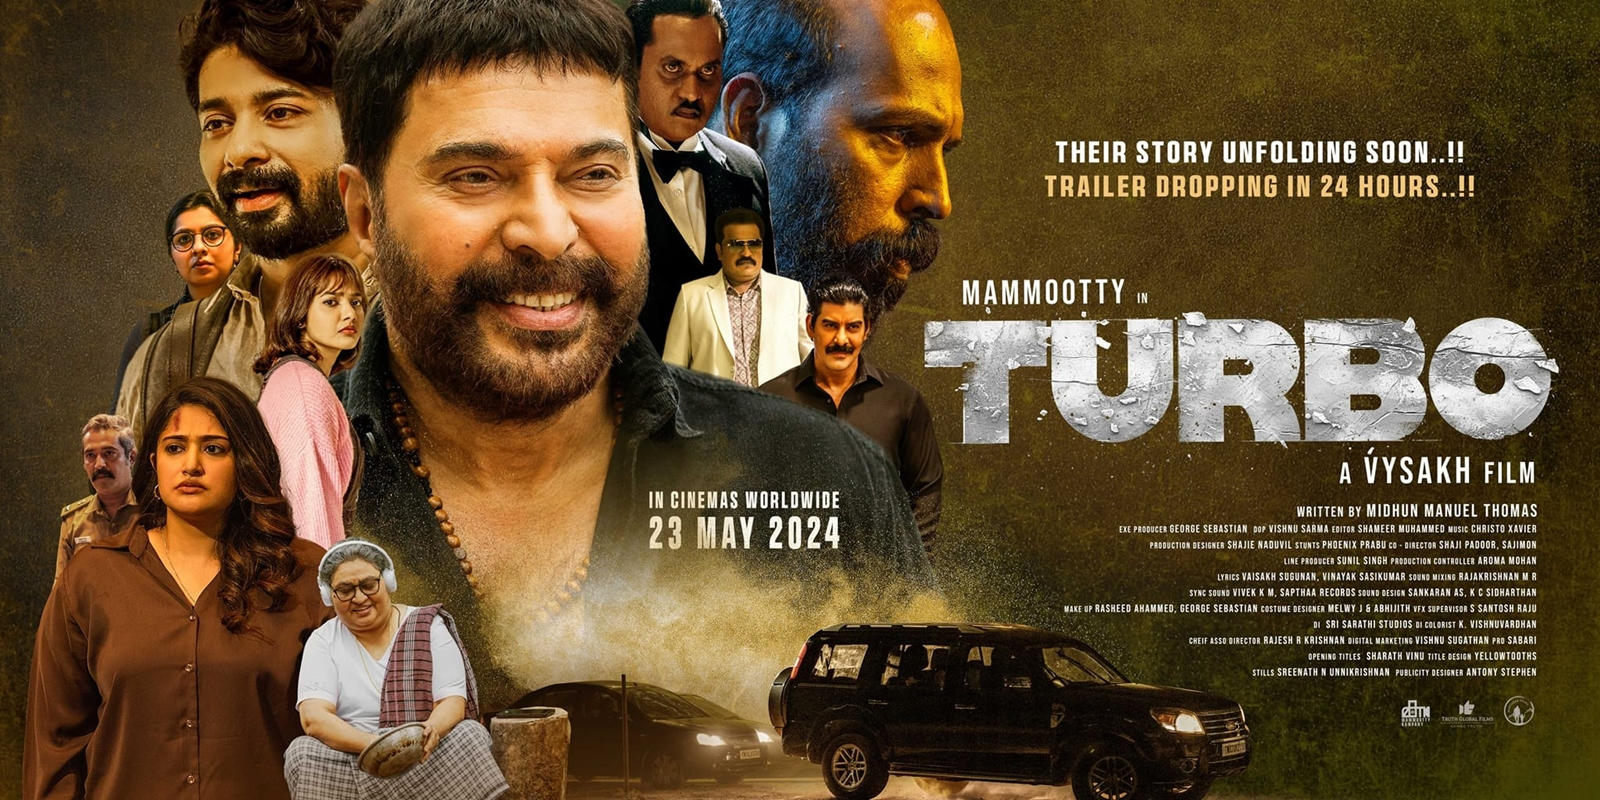 Turbo Trailer: ममूटी की फिल्म 'टर्बो' का ट्रेलर हुआ जारी, जबर्दस्त एक्शन ड्रामा देख फैंस हुए उत्साहित